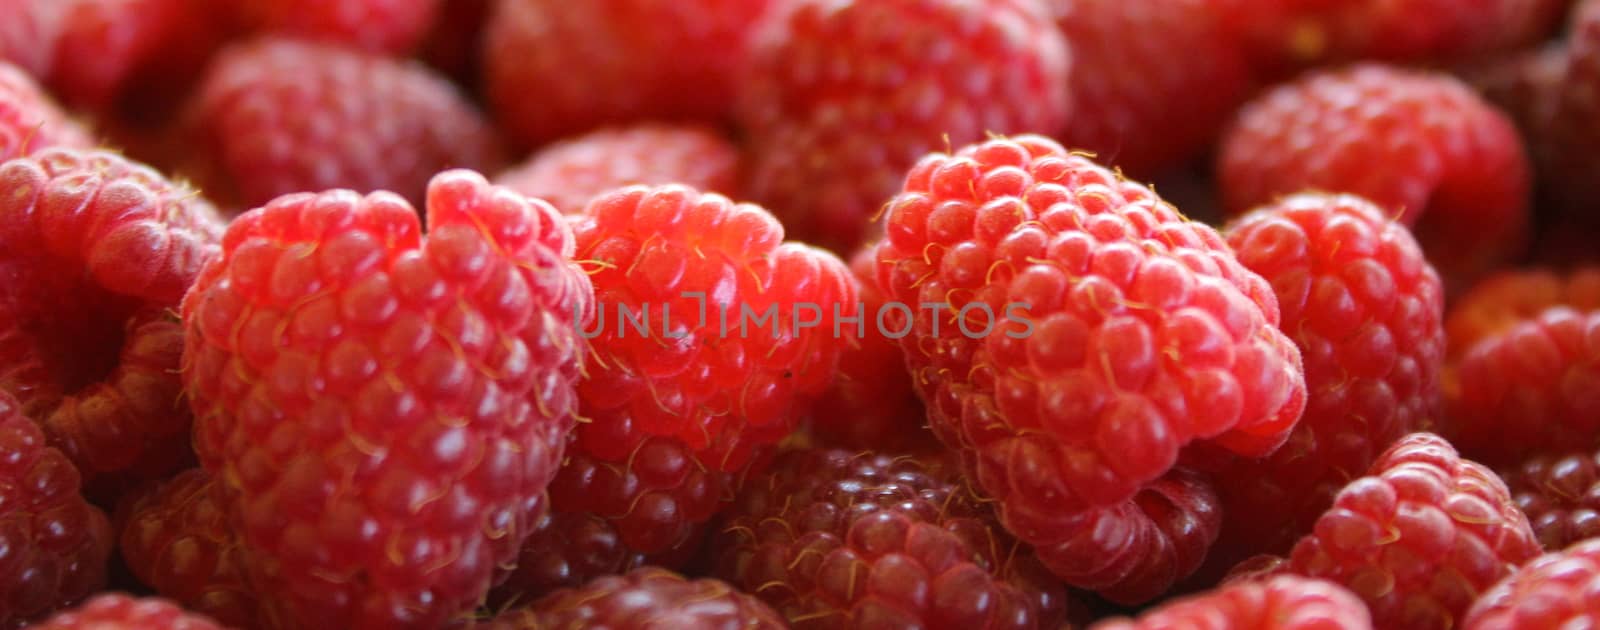 Banner of raspberries. Close up of raspberries. Zavidovici, Bosnia and Herzegovina.